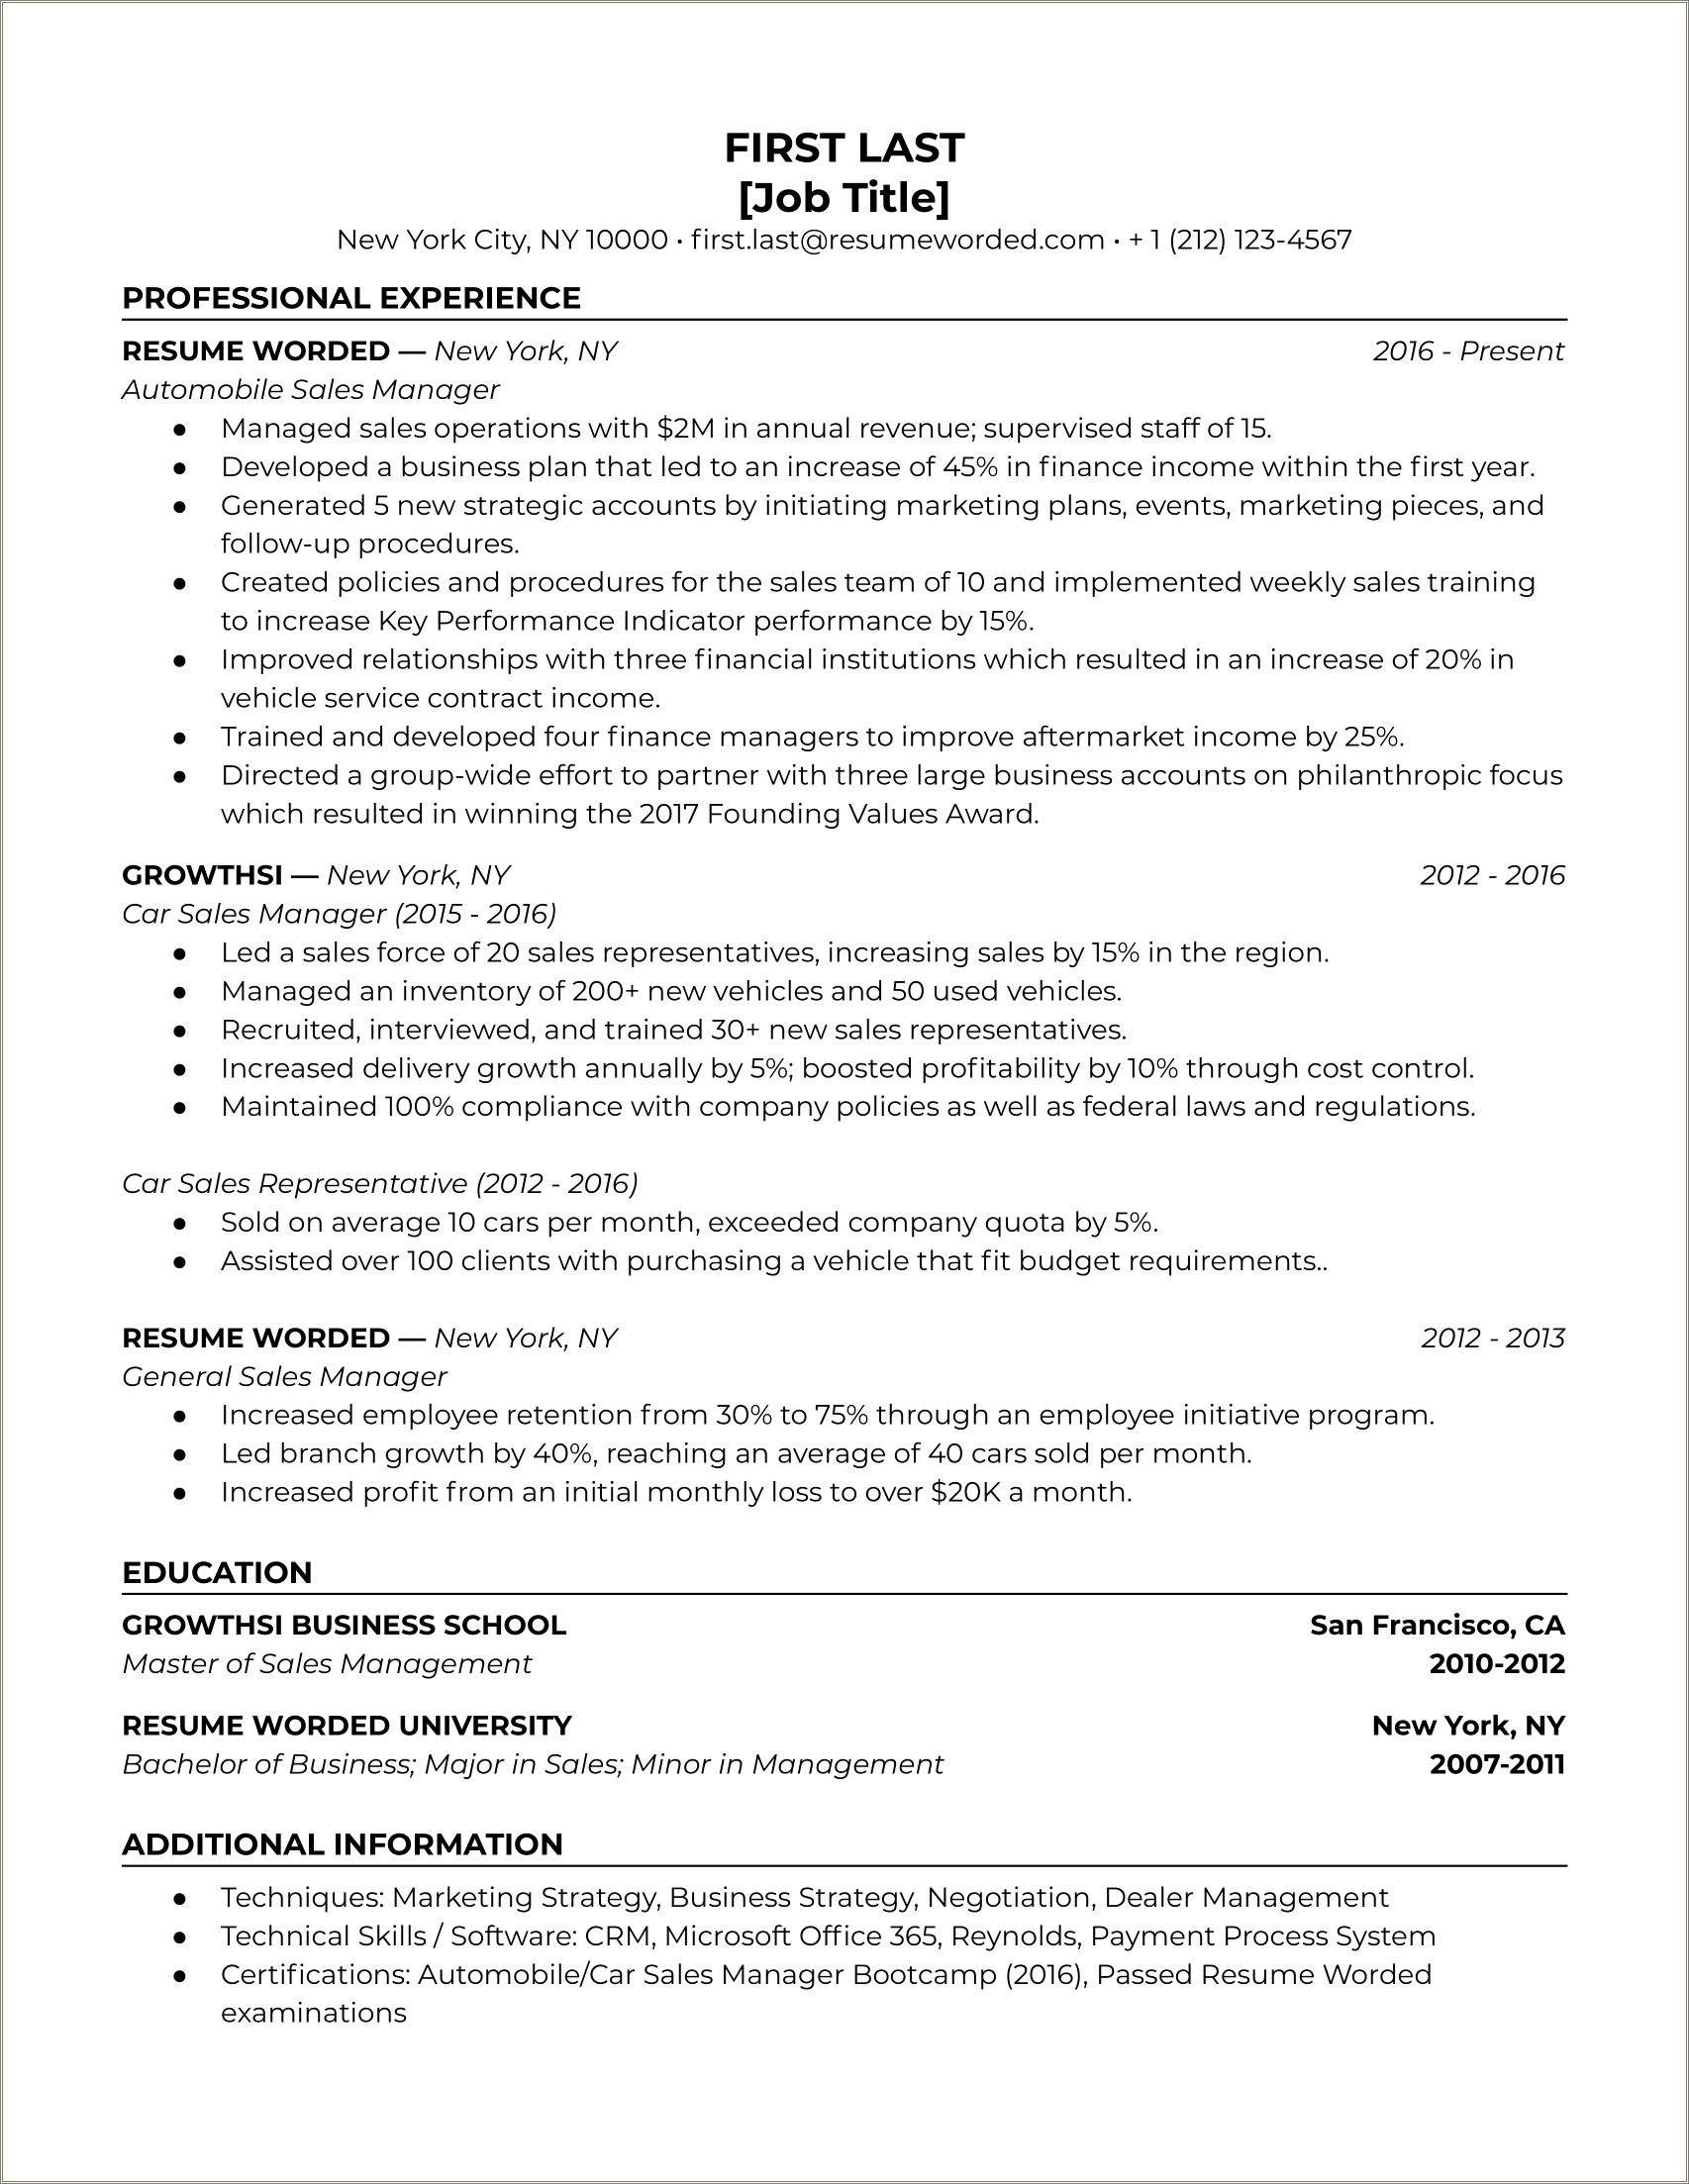 Facilities Manager Job Description For Resume